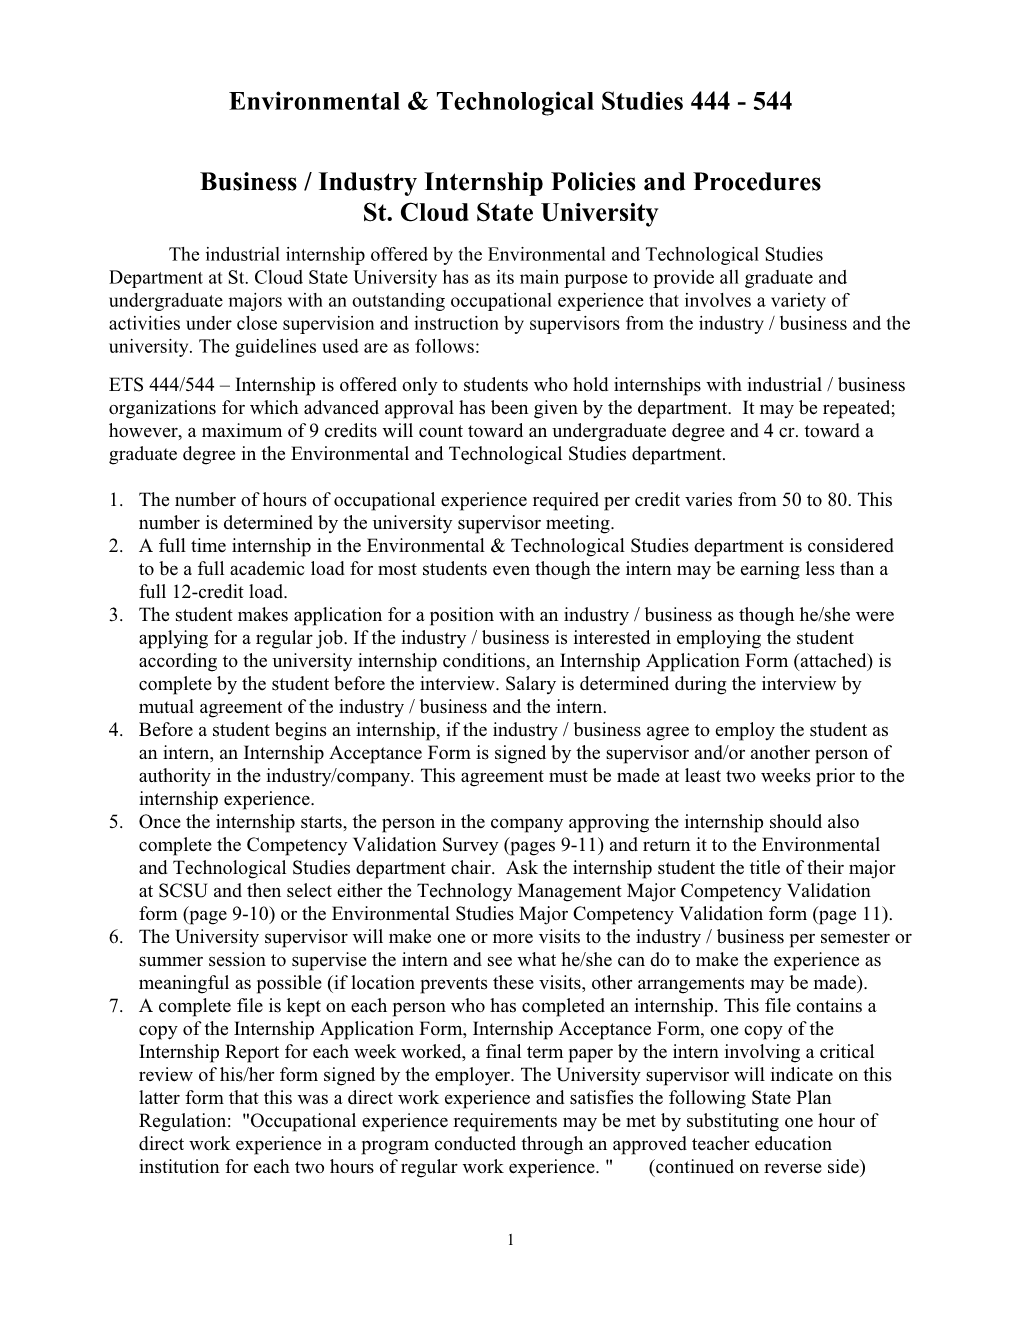 Business / Industry Internship Policies and Procedures